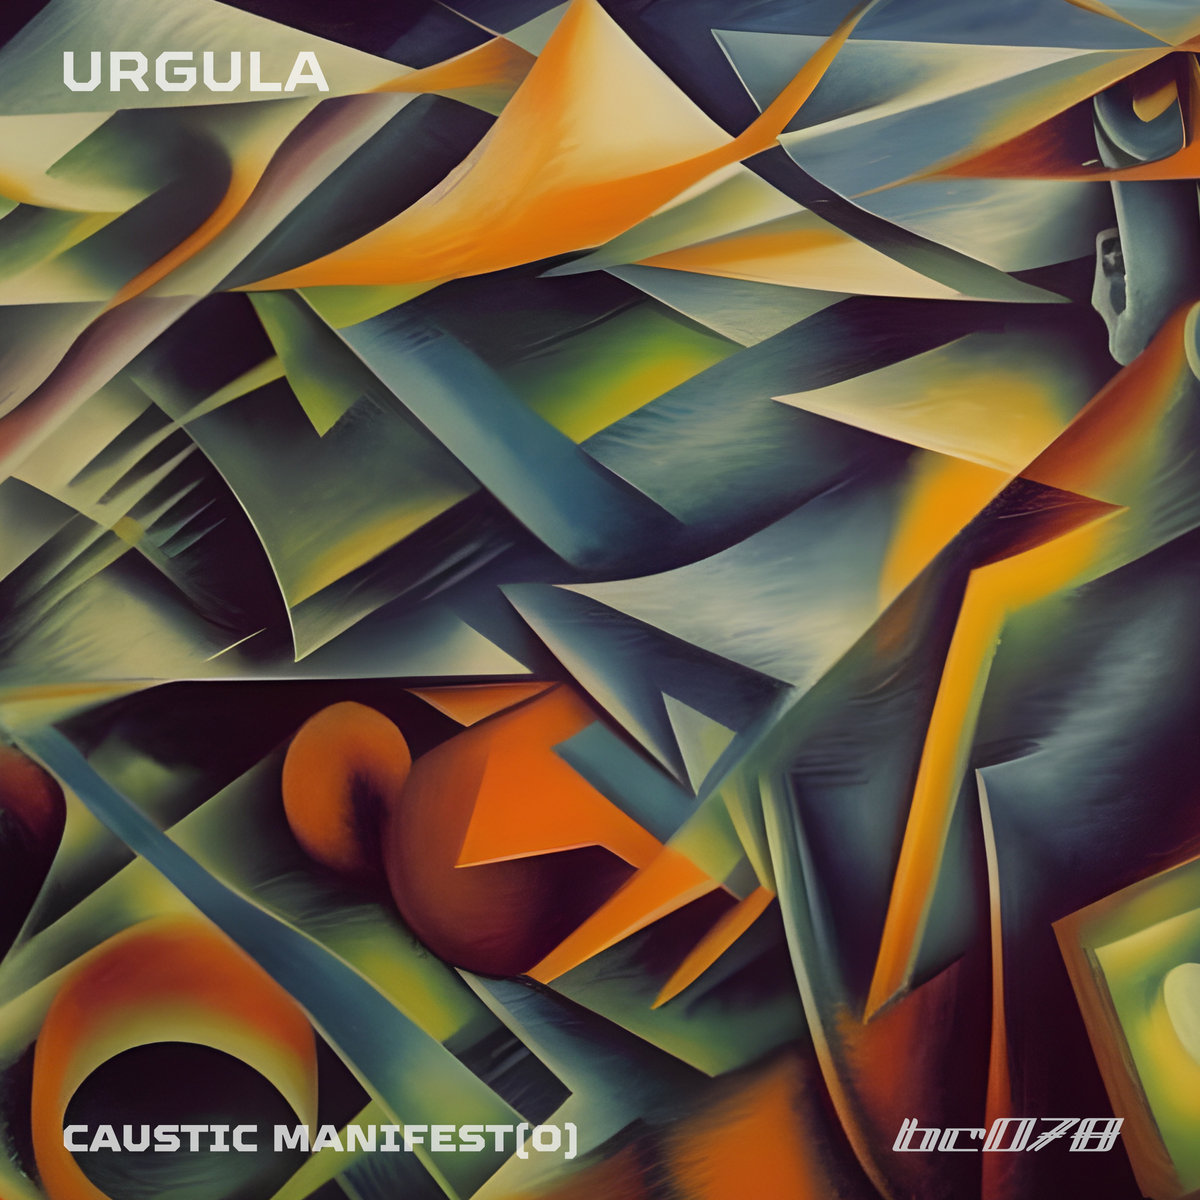 Urgula presents his new album “Caustic Manifest(o)”